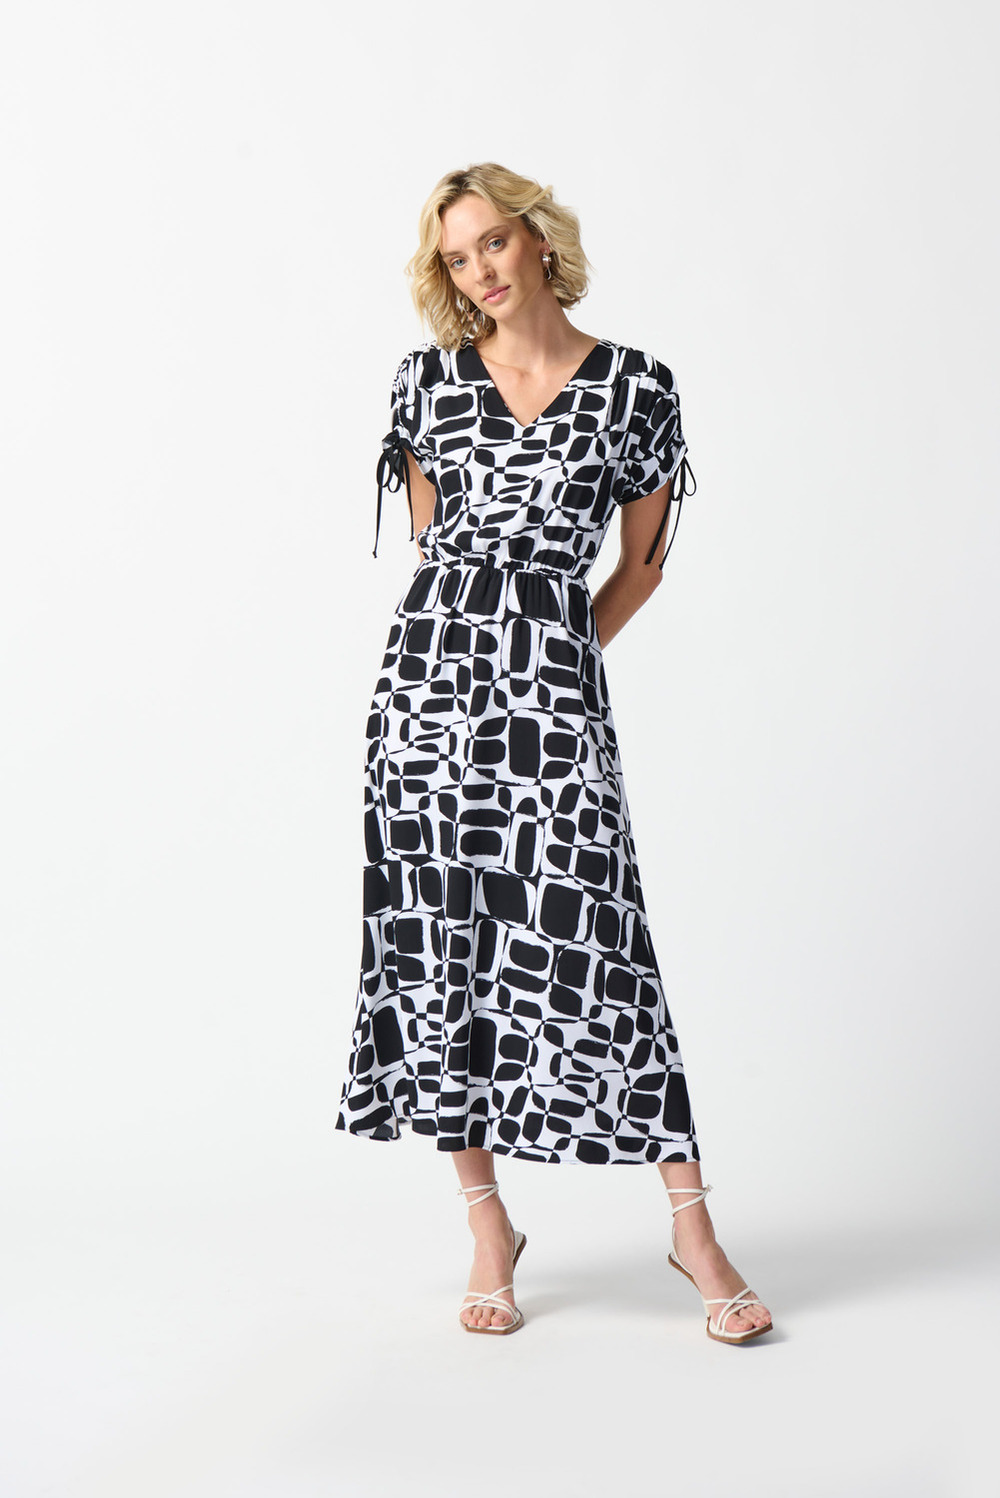 Abstract Print Maxi Dress Style 242100. Vanilla/black